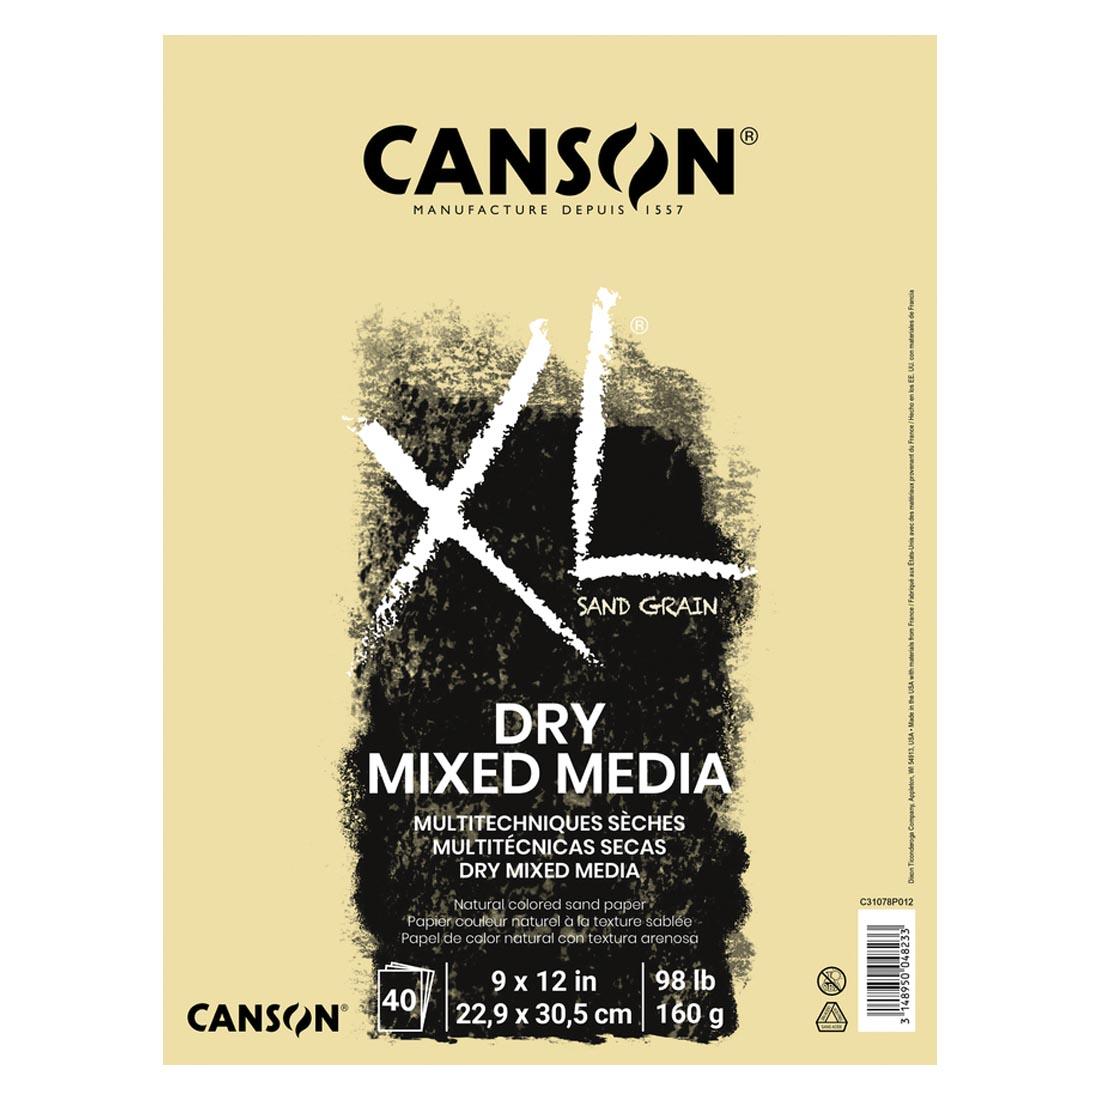 Canson XL Series Sand Grain Dry Mixed Media Pad 9x12"